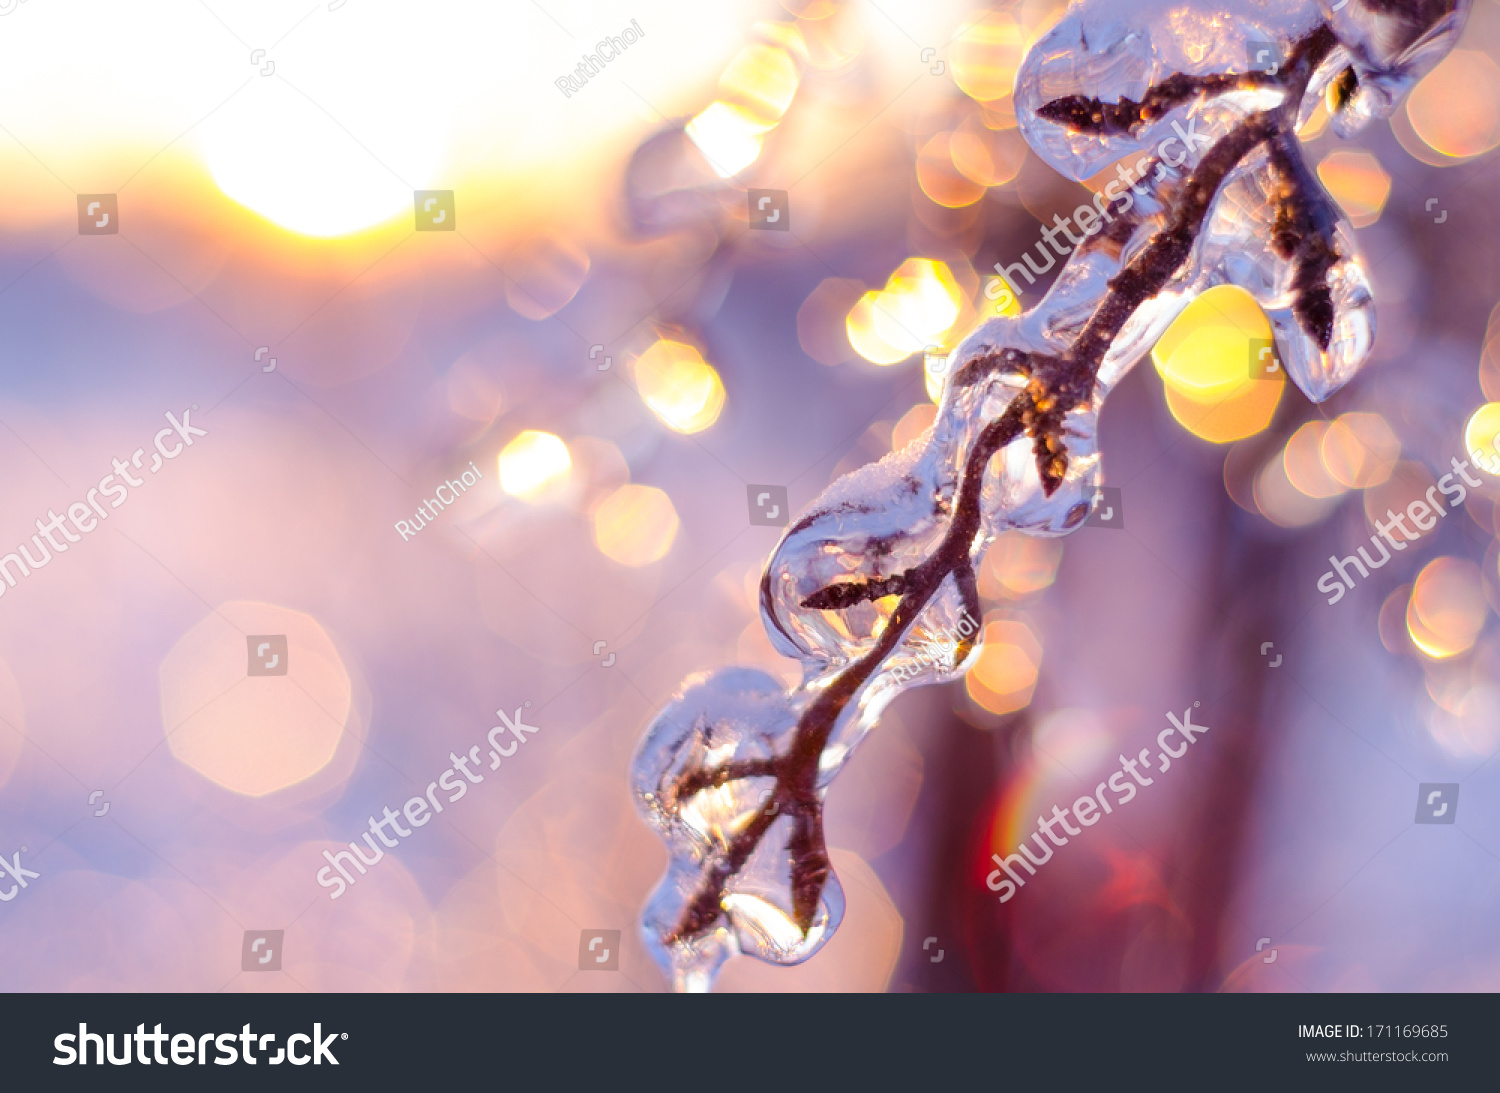 Beautiful sparkling Winter scene #171169685